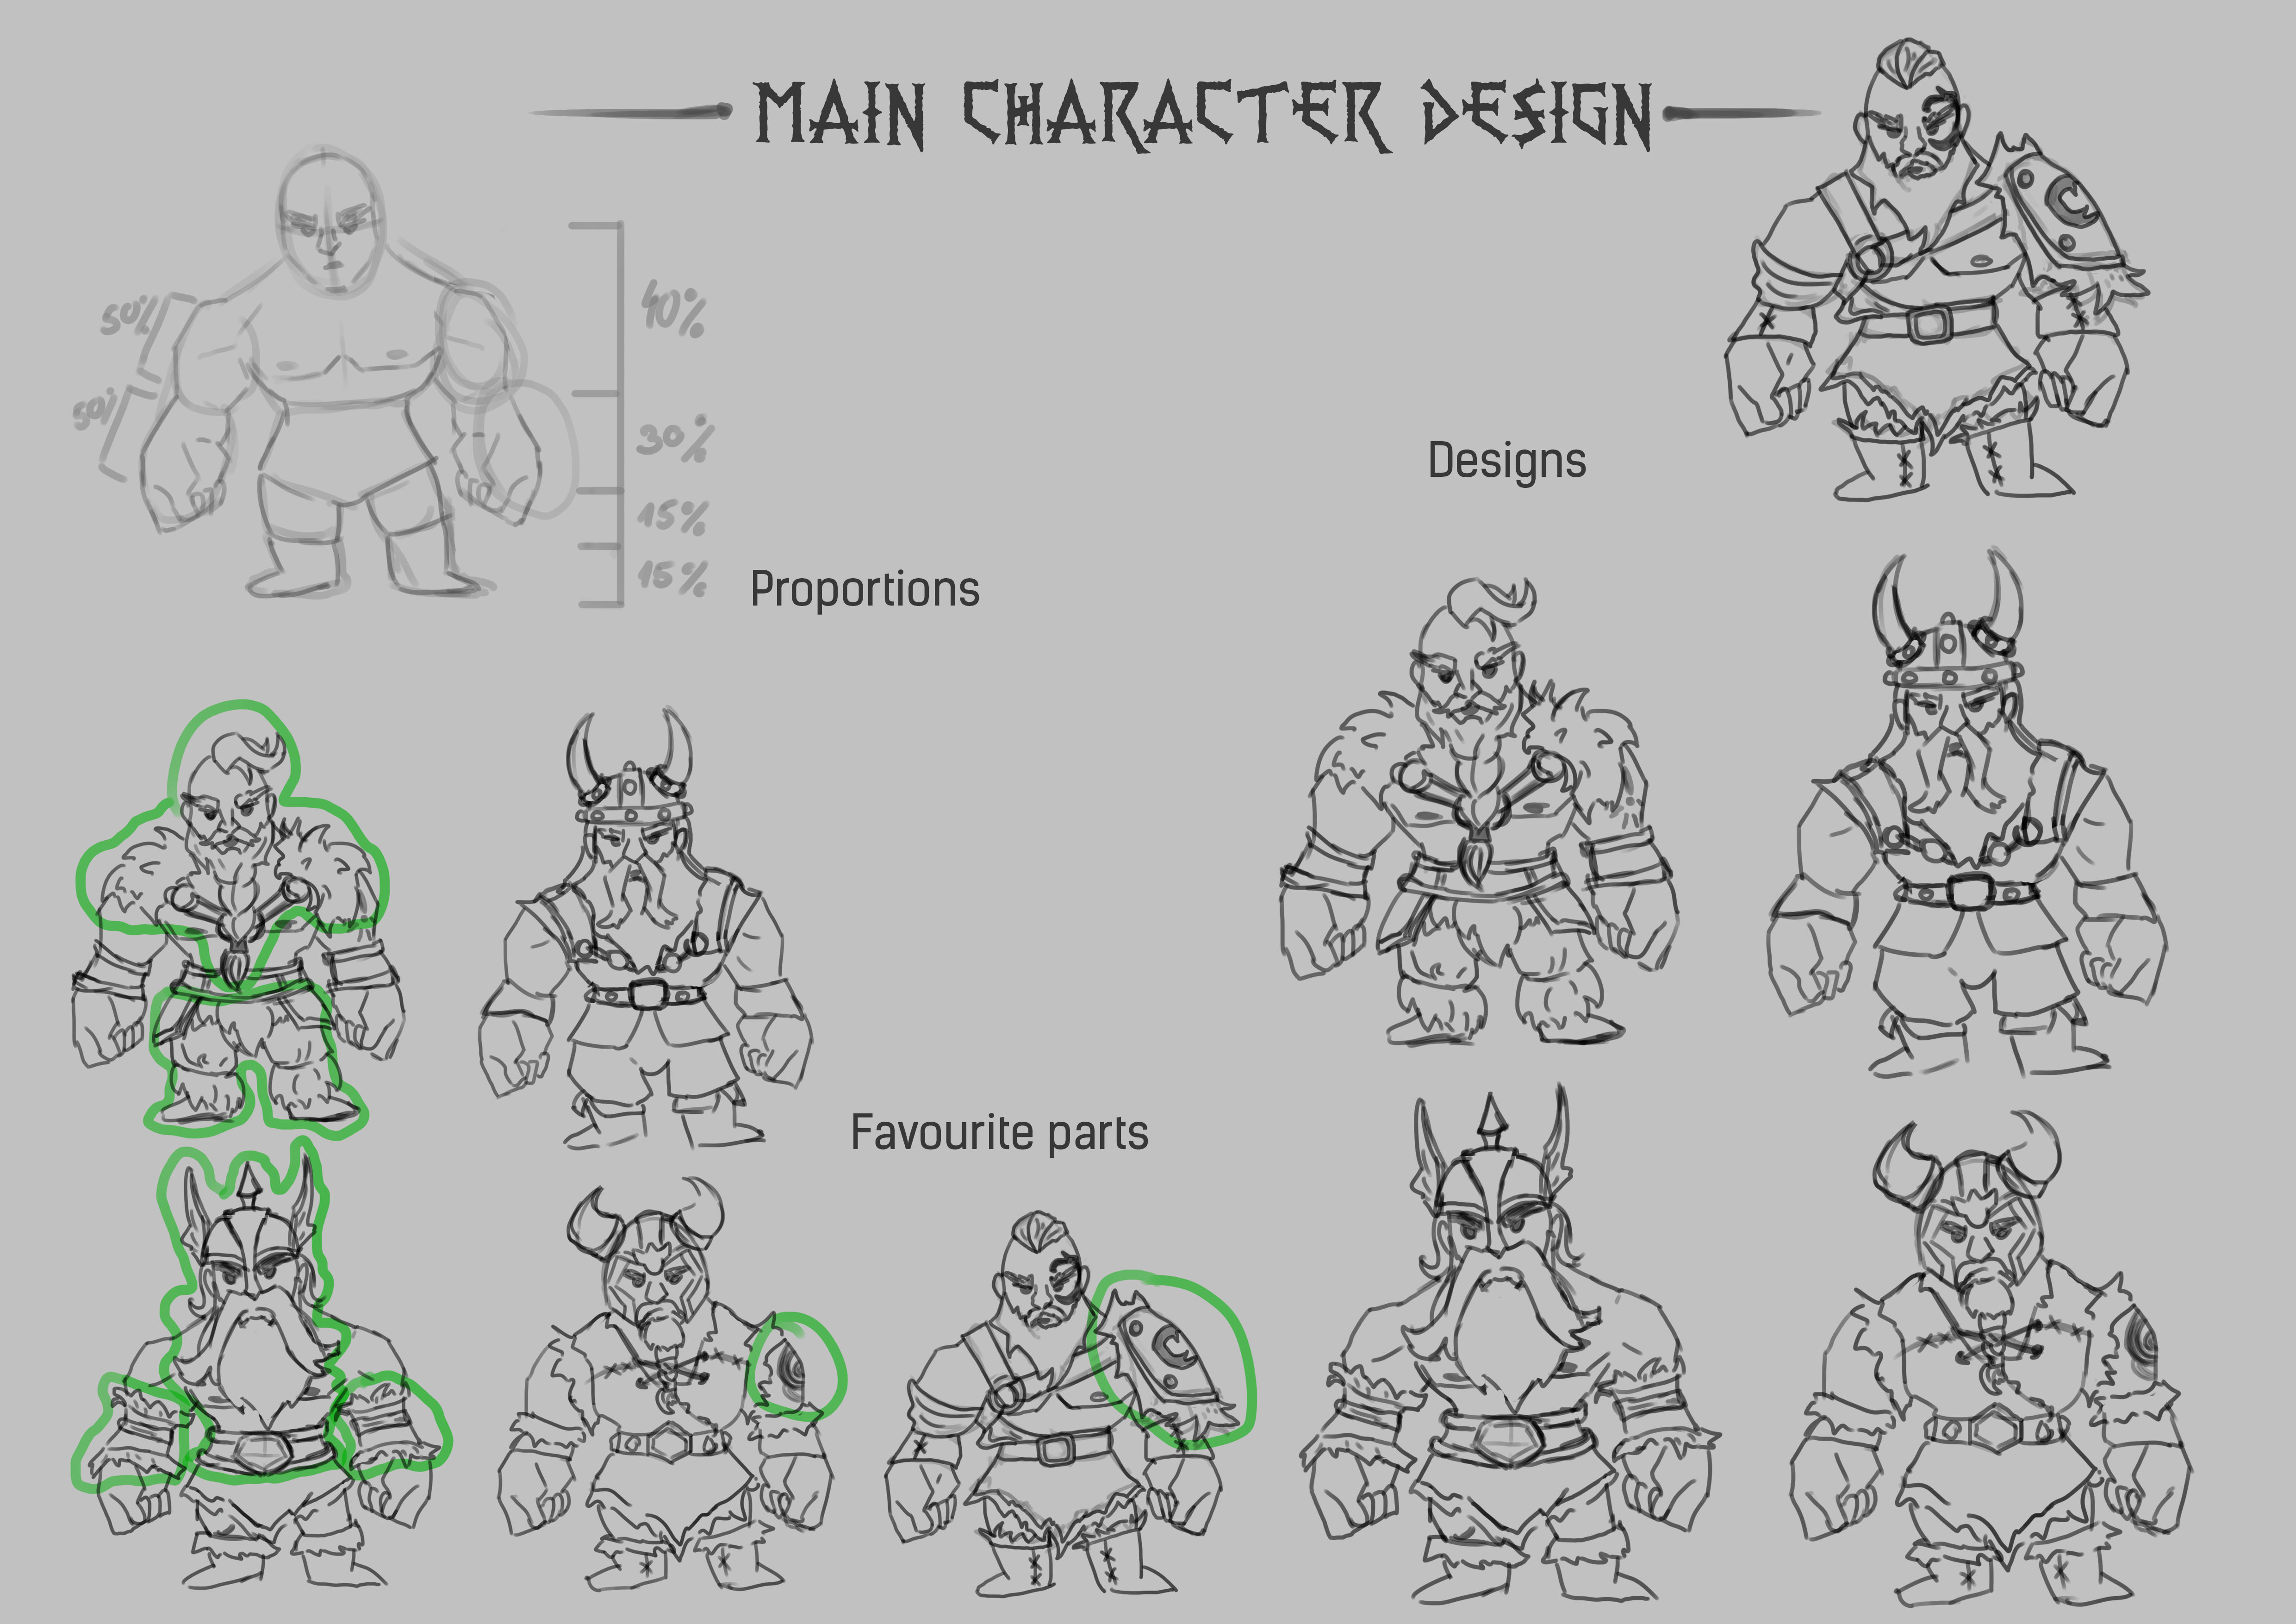 Main Character designs